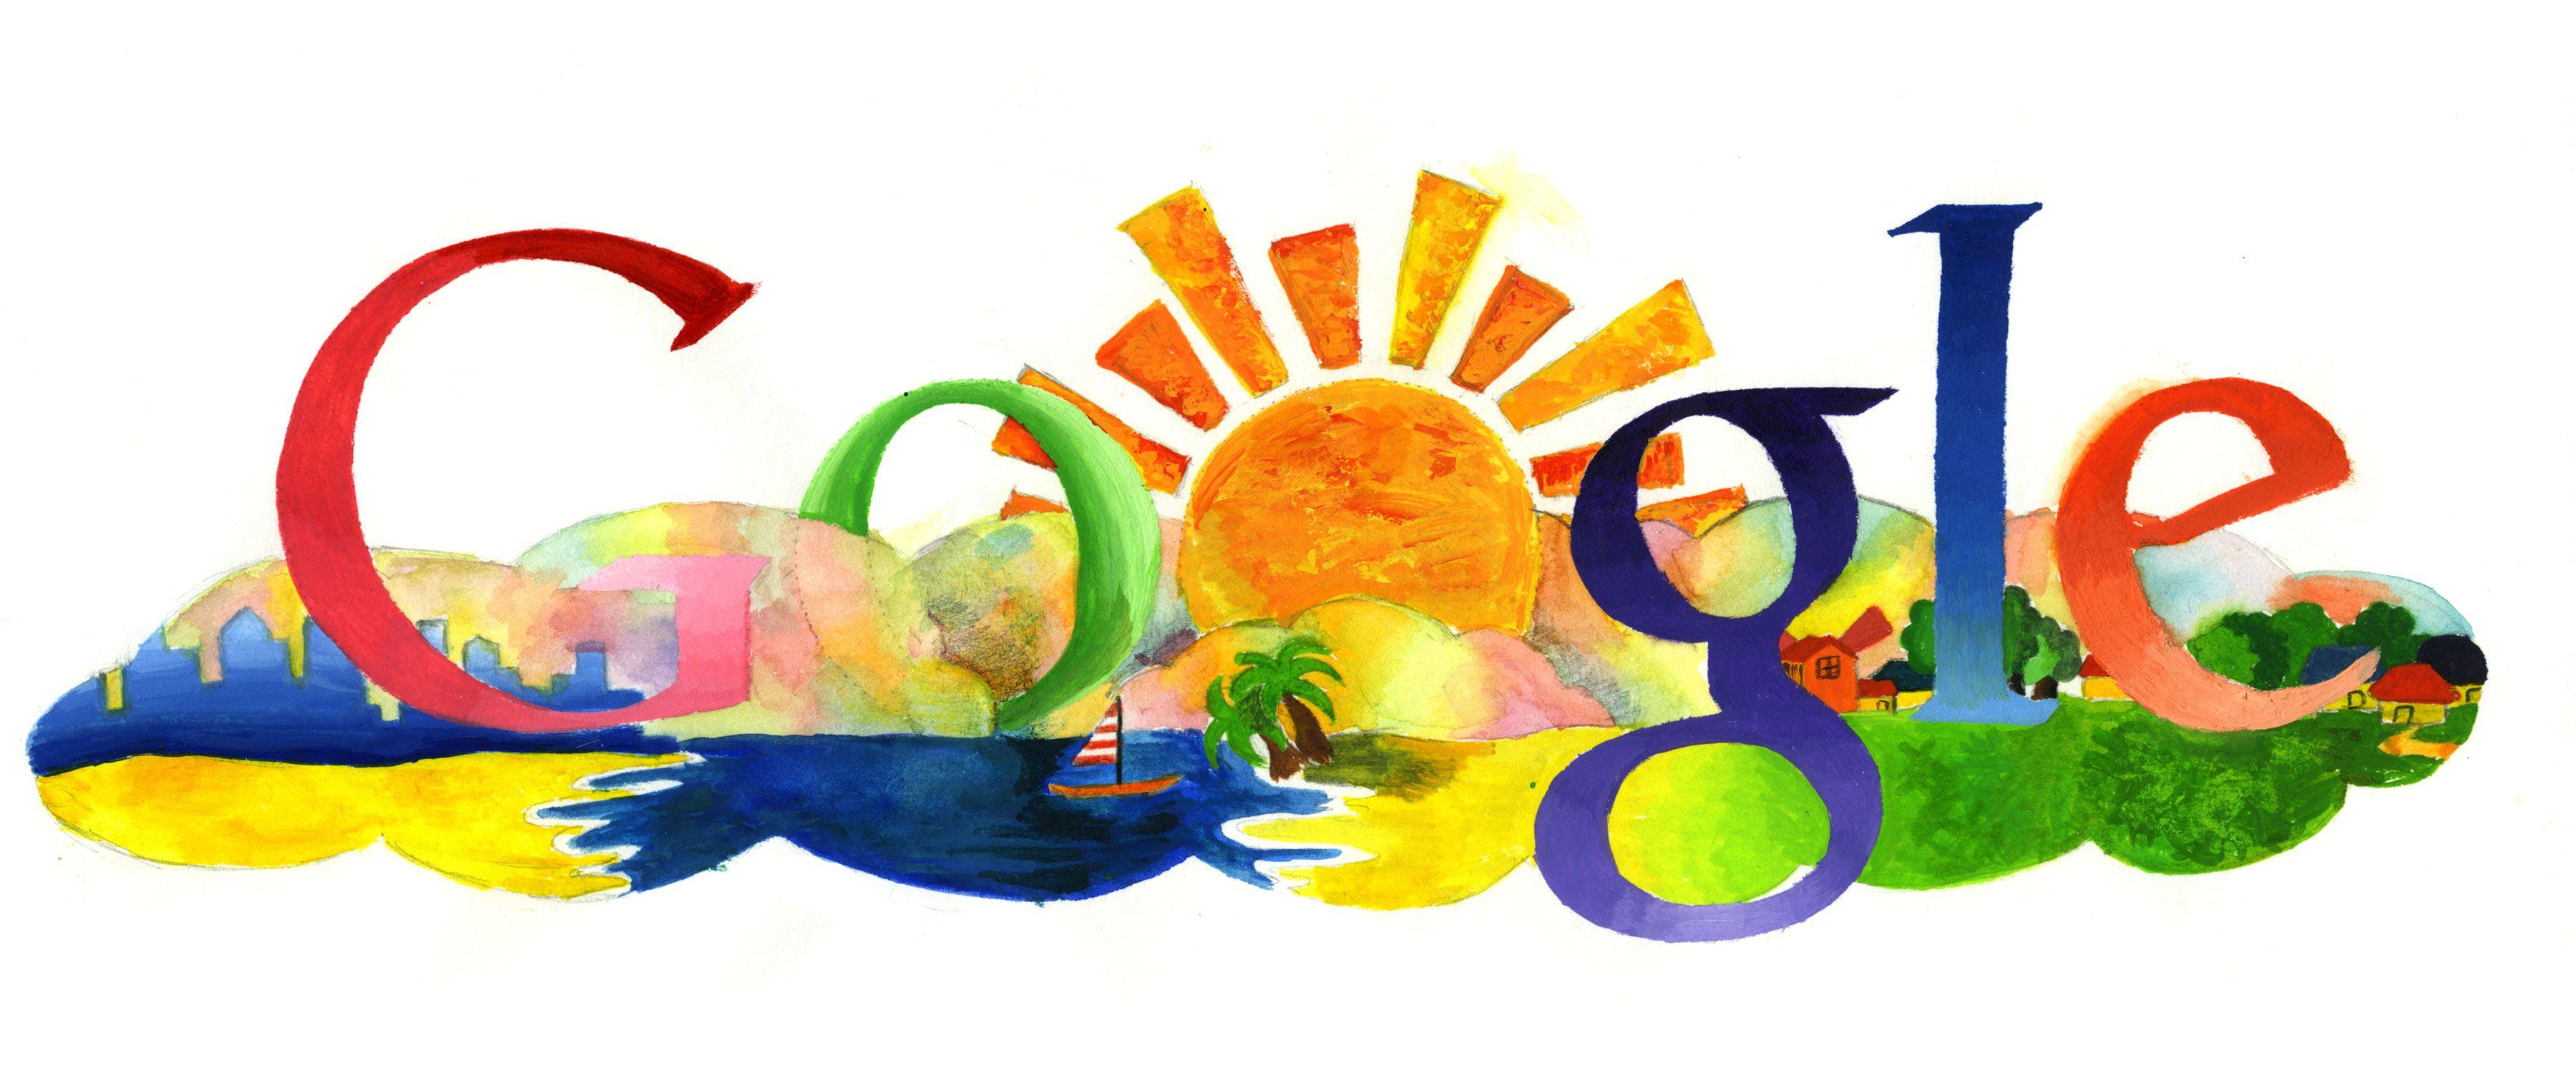 Fun Google Logo - Google doodle logo | Bipedias's Blog